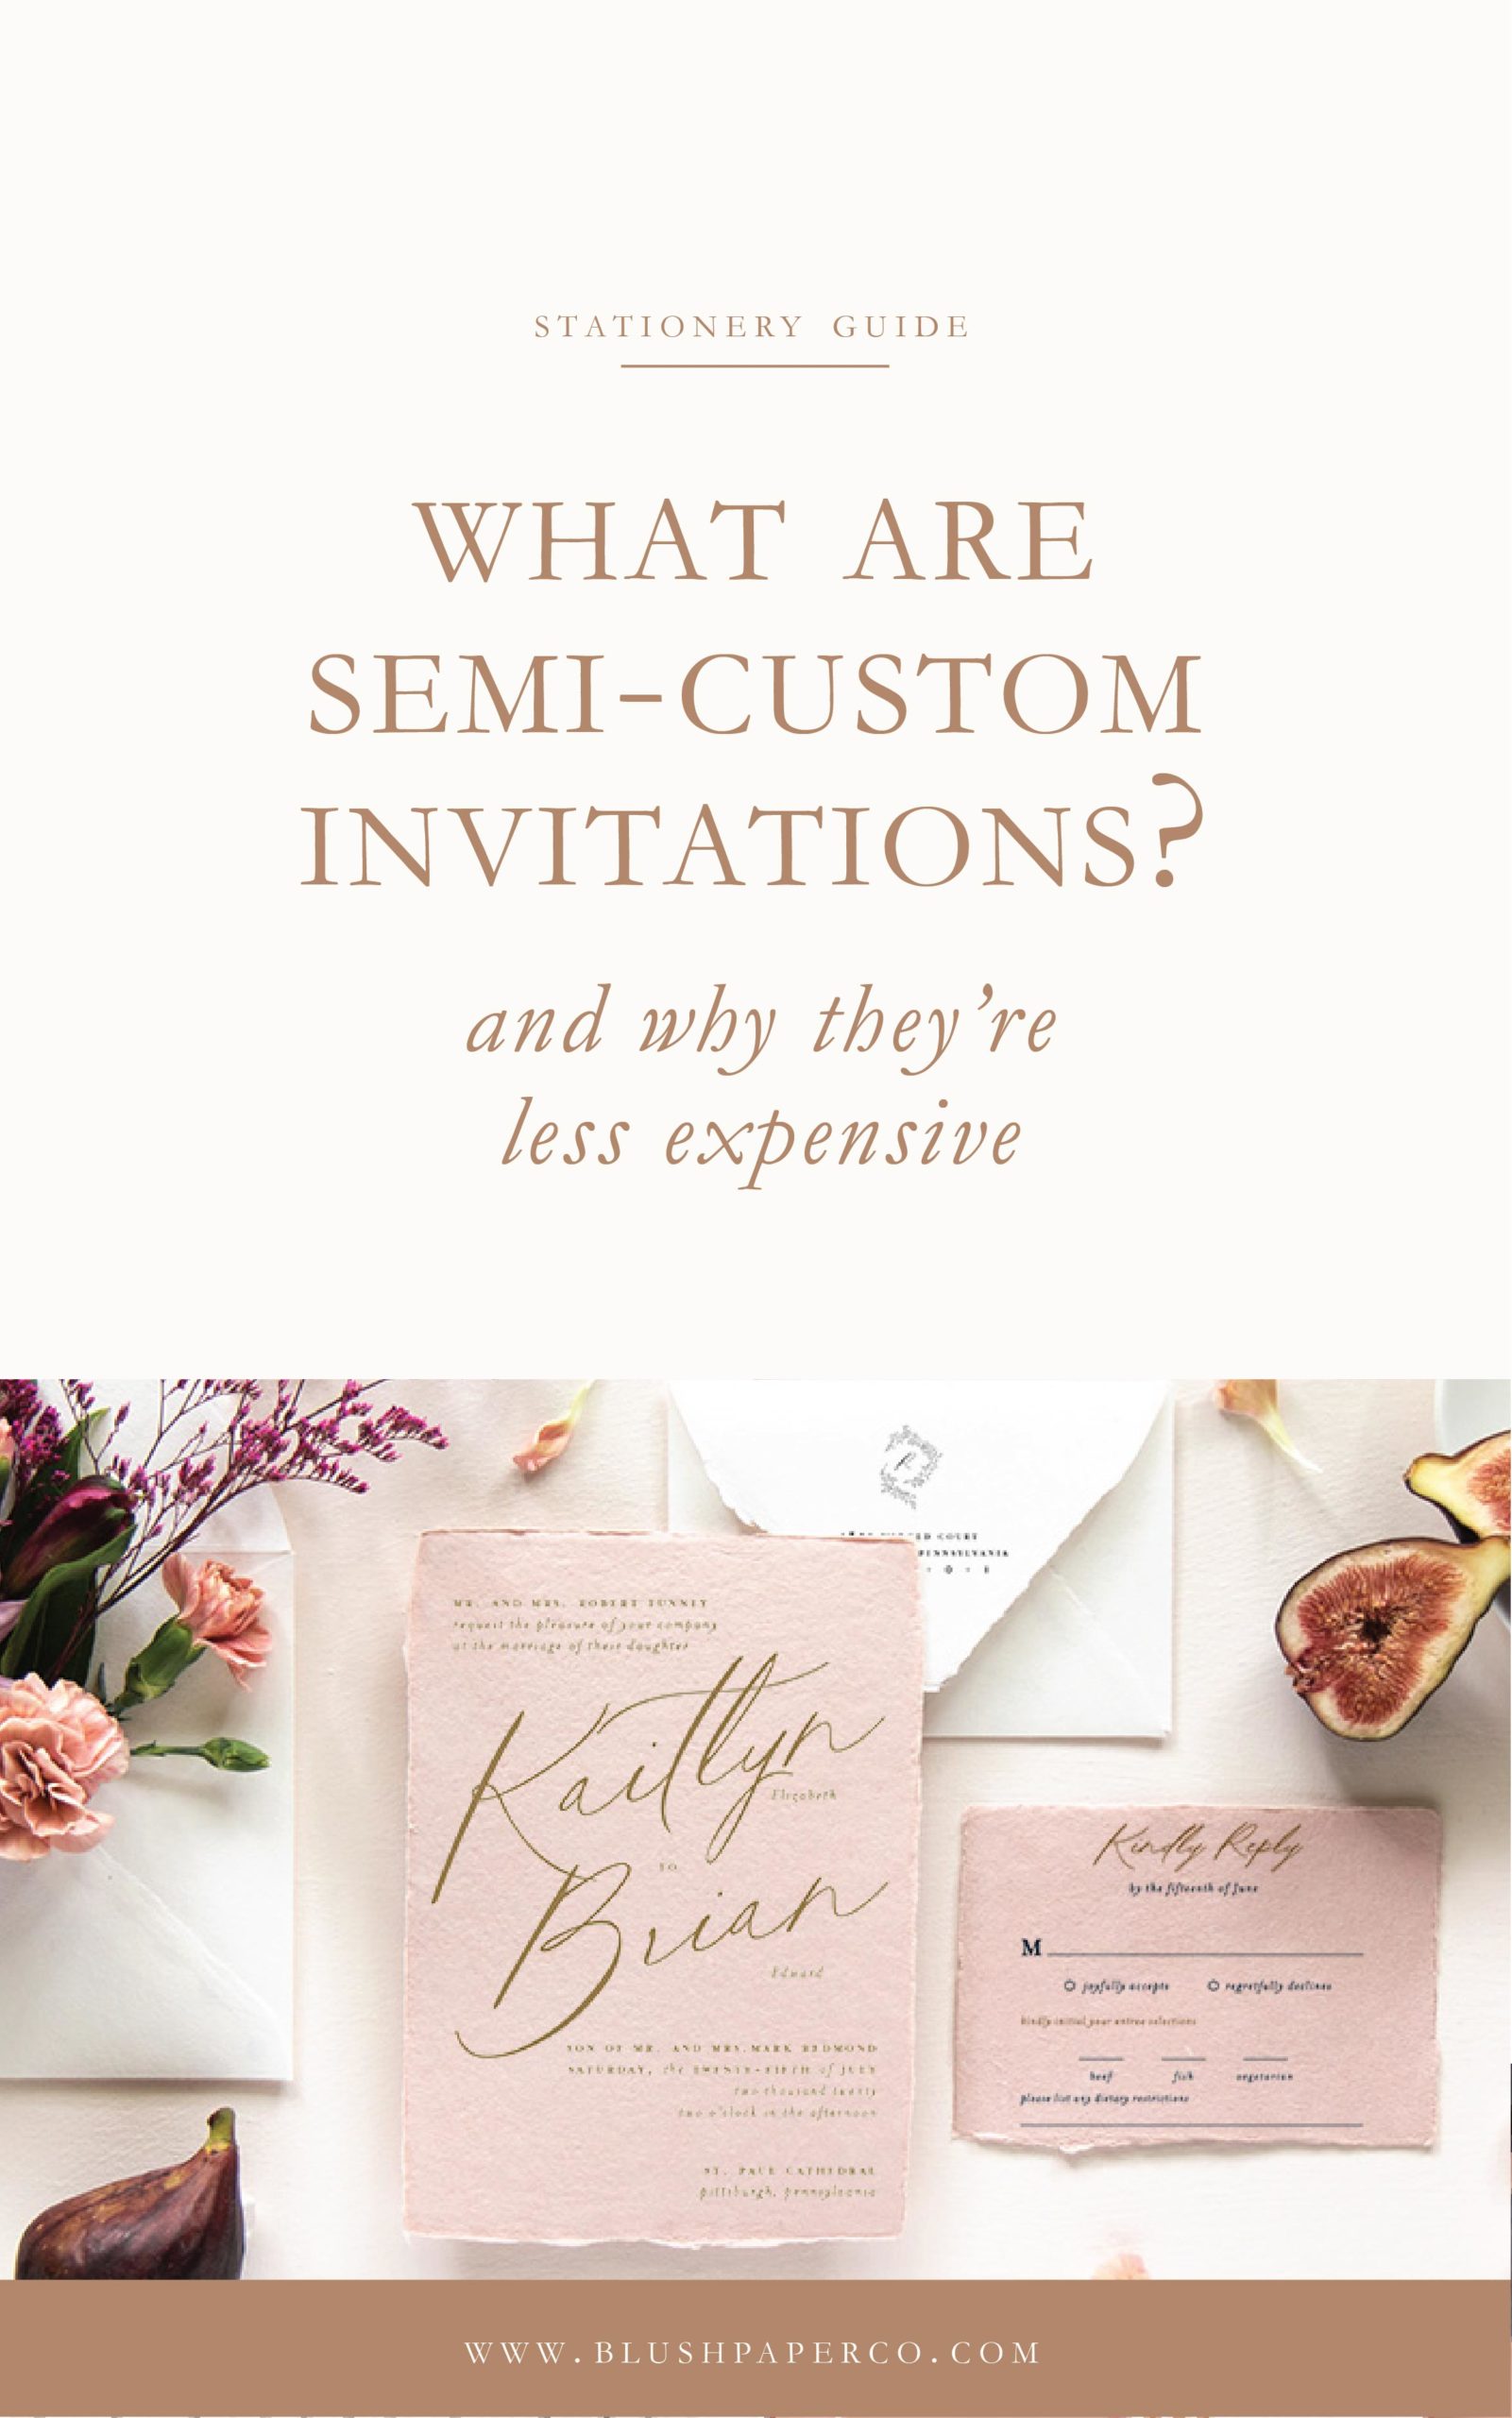 semi-custom wedding invitations by blush paper co